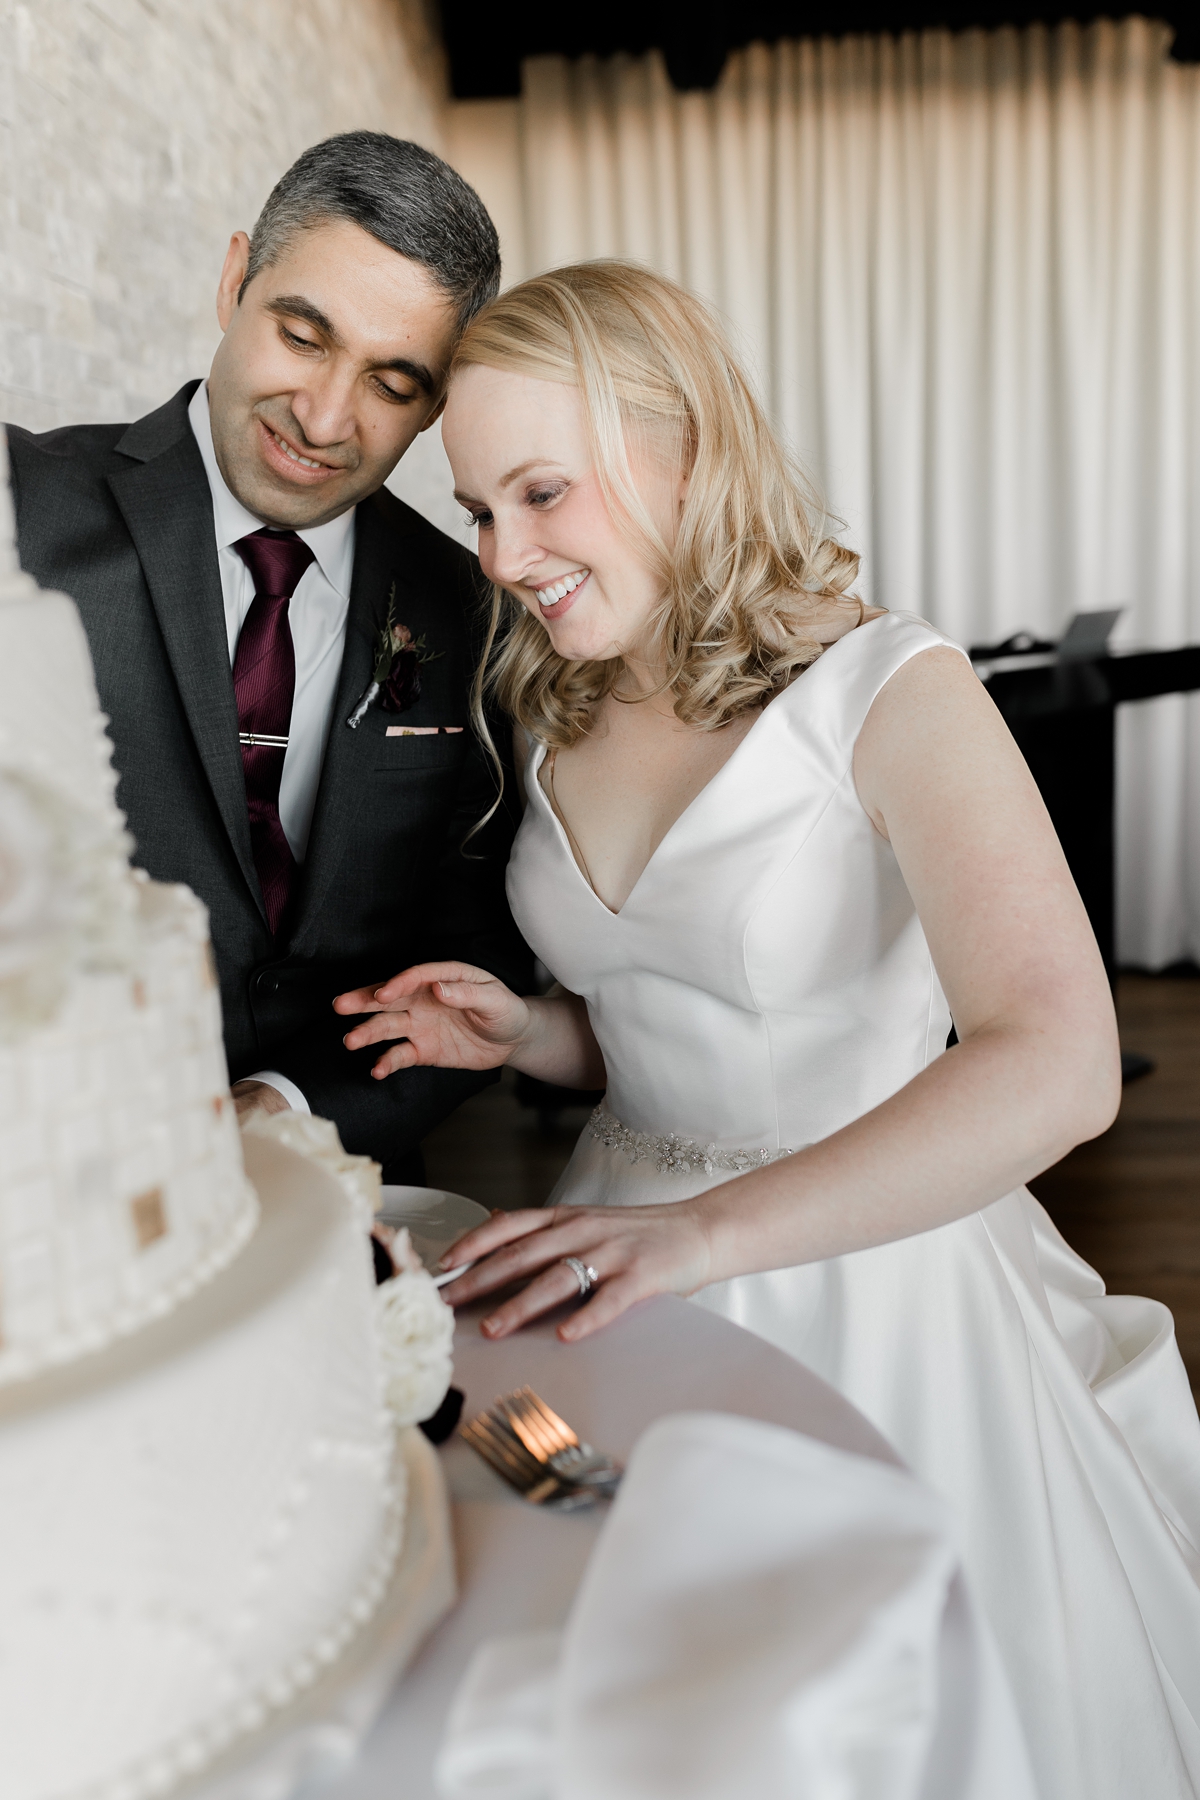 cute bride and groom cutting cake